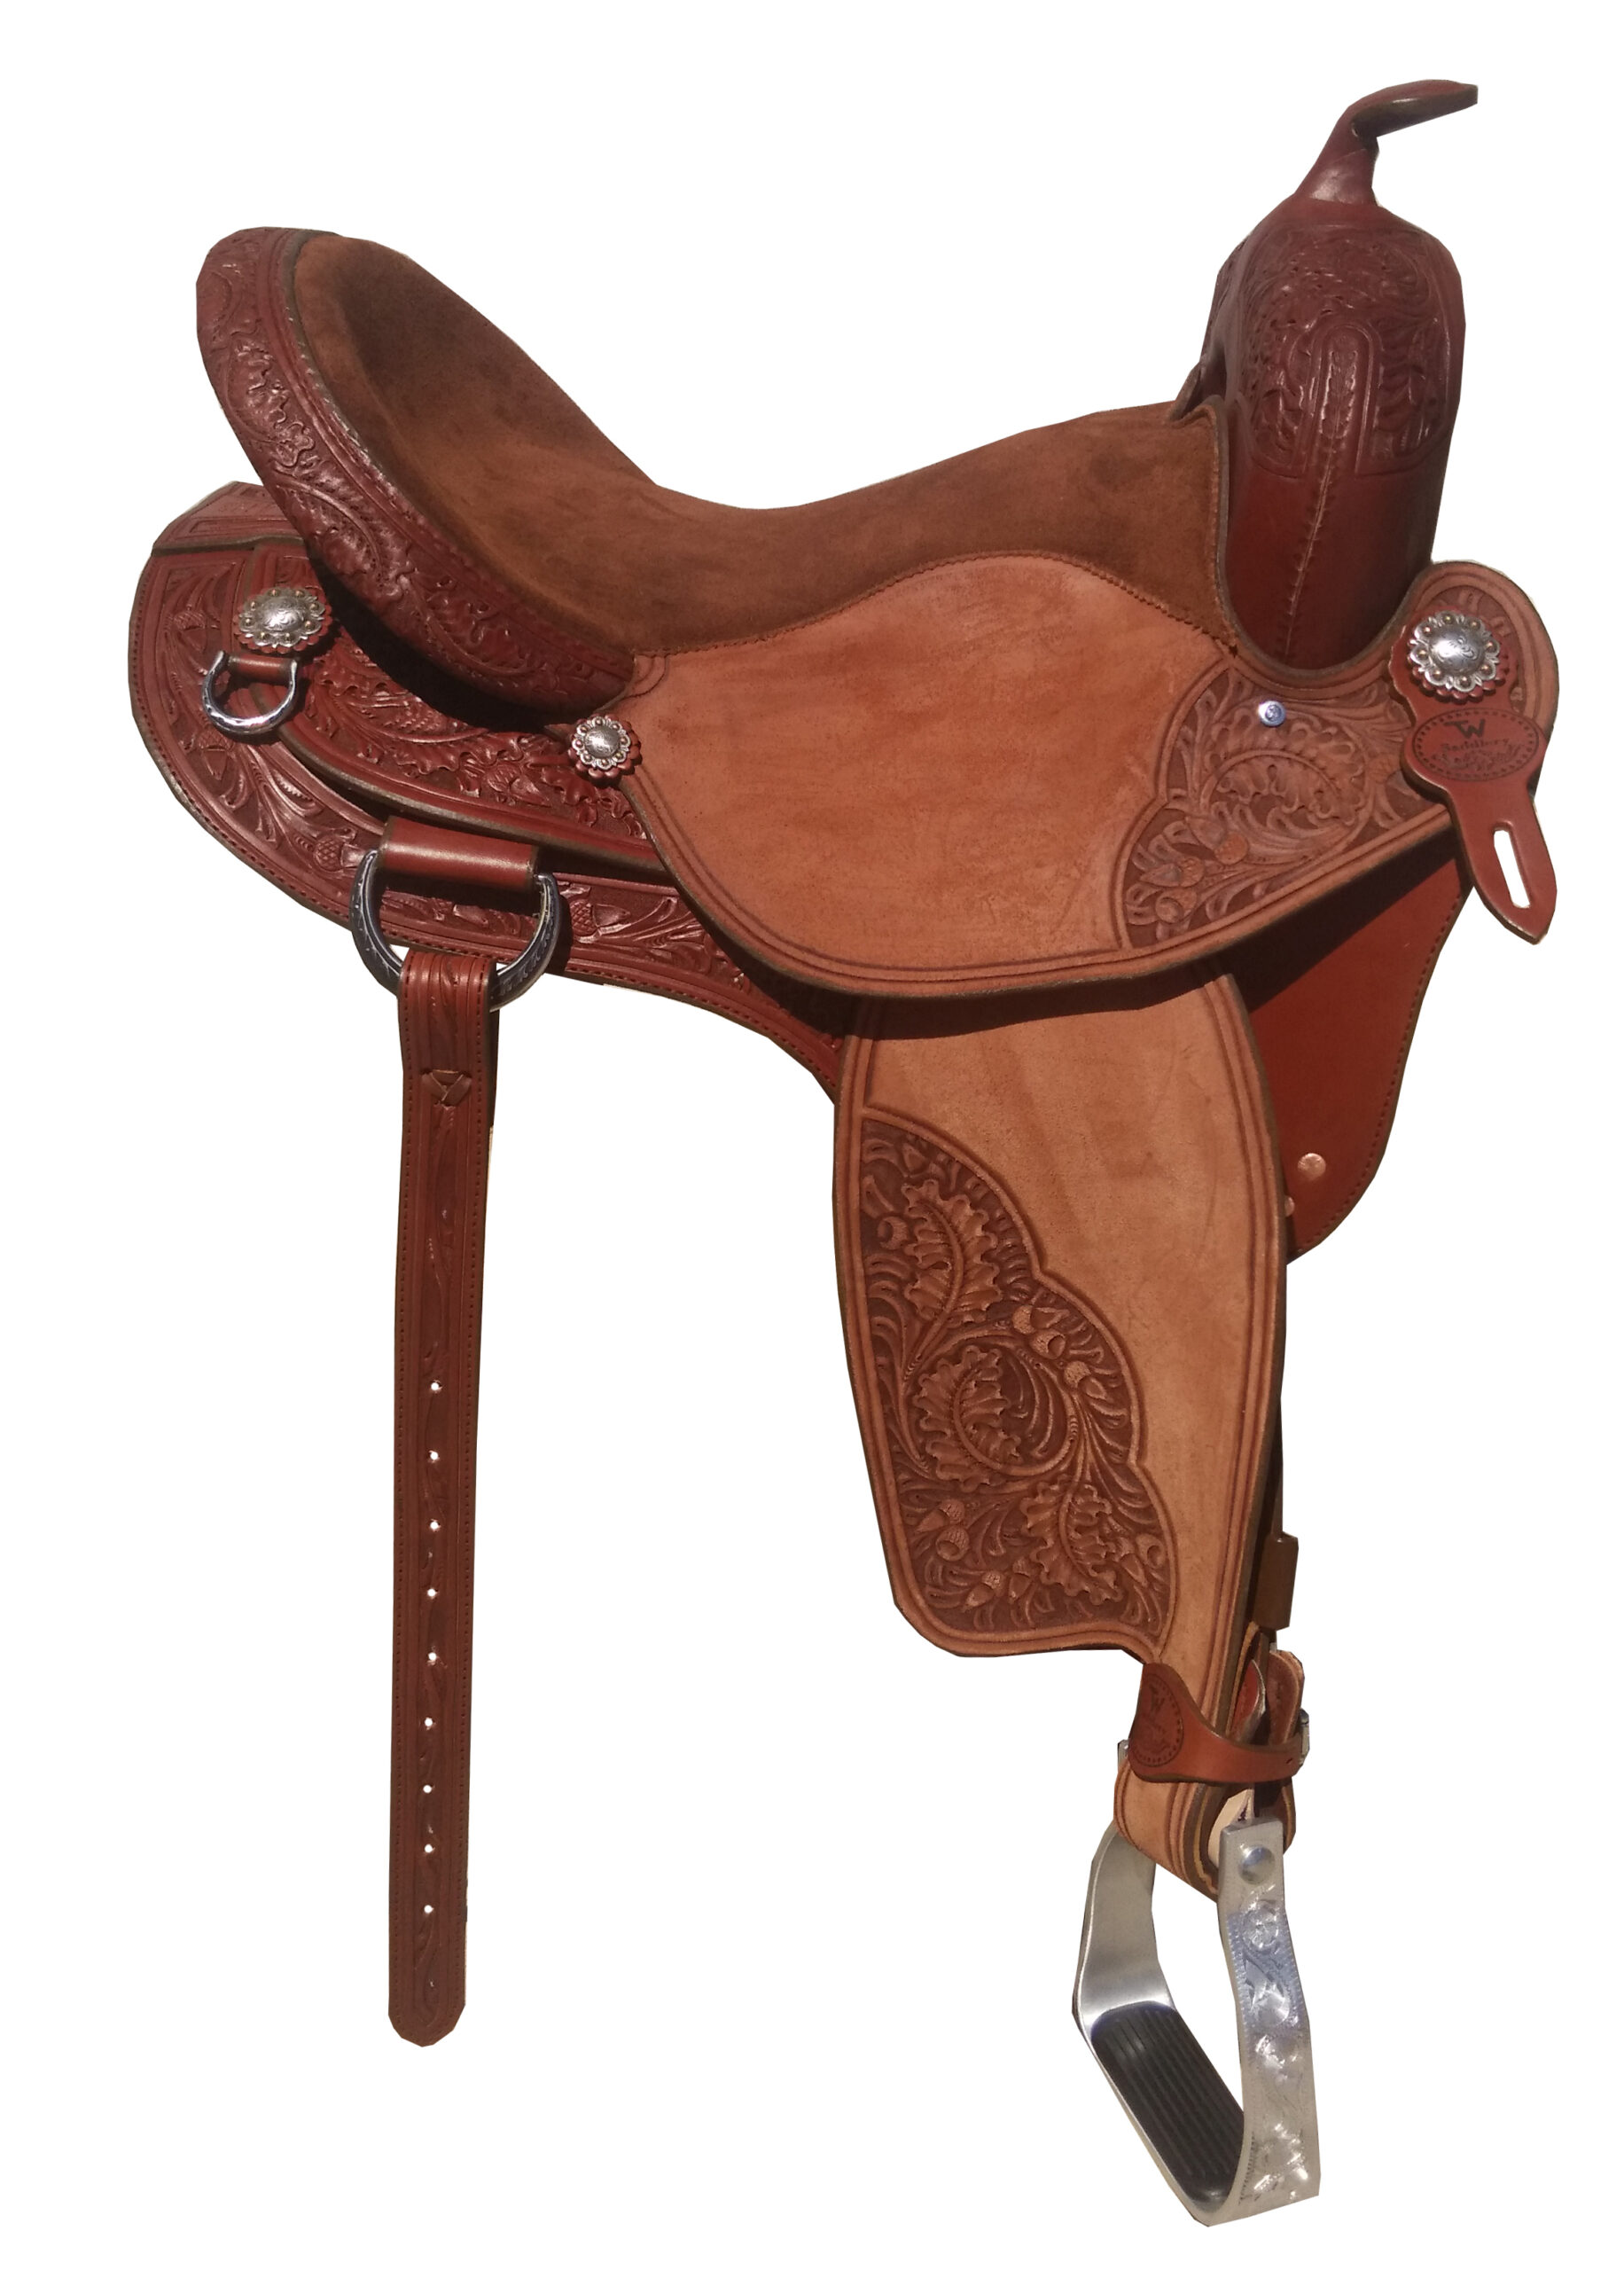 Shoulder Relief Cinch - Movement & Saddle Fit Enhancement – Total Saddle Fit